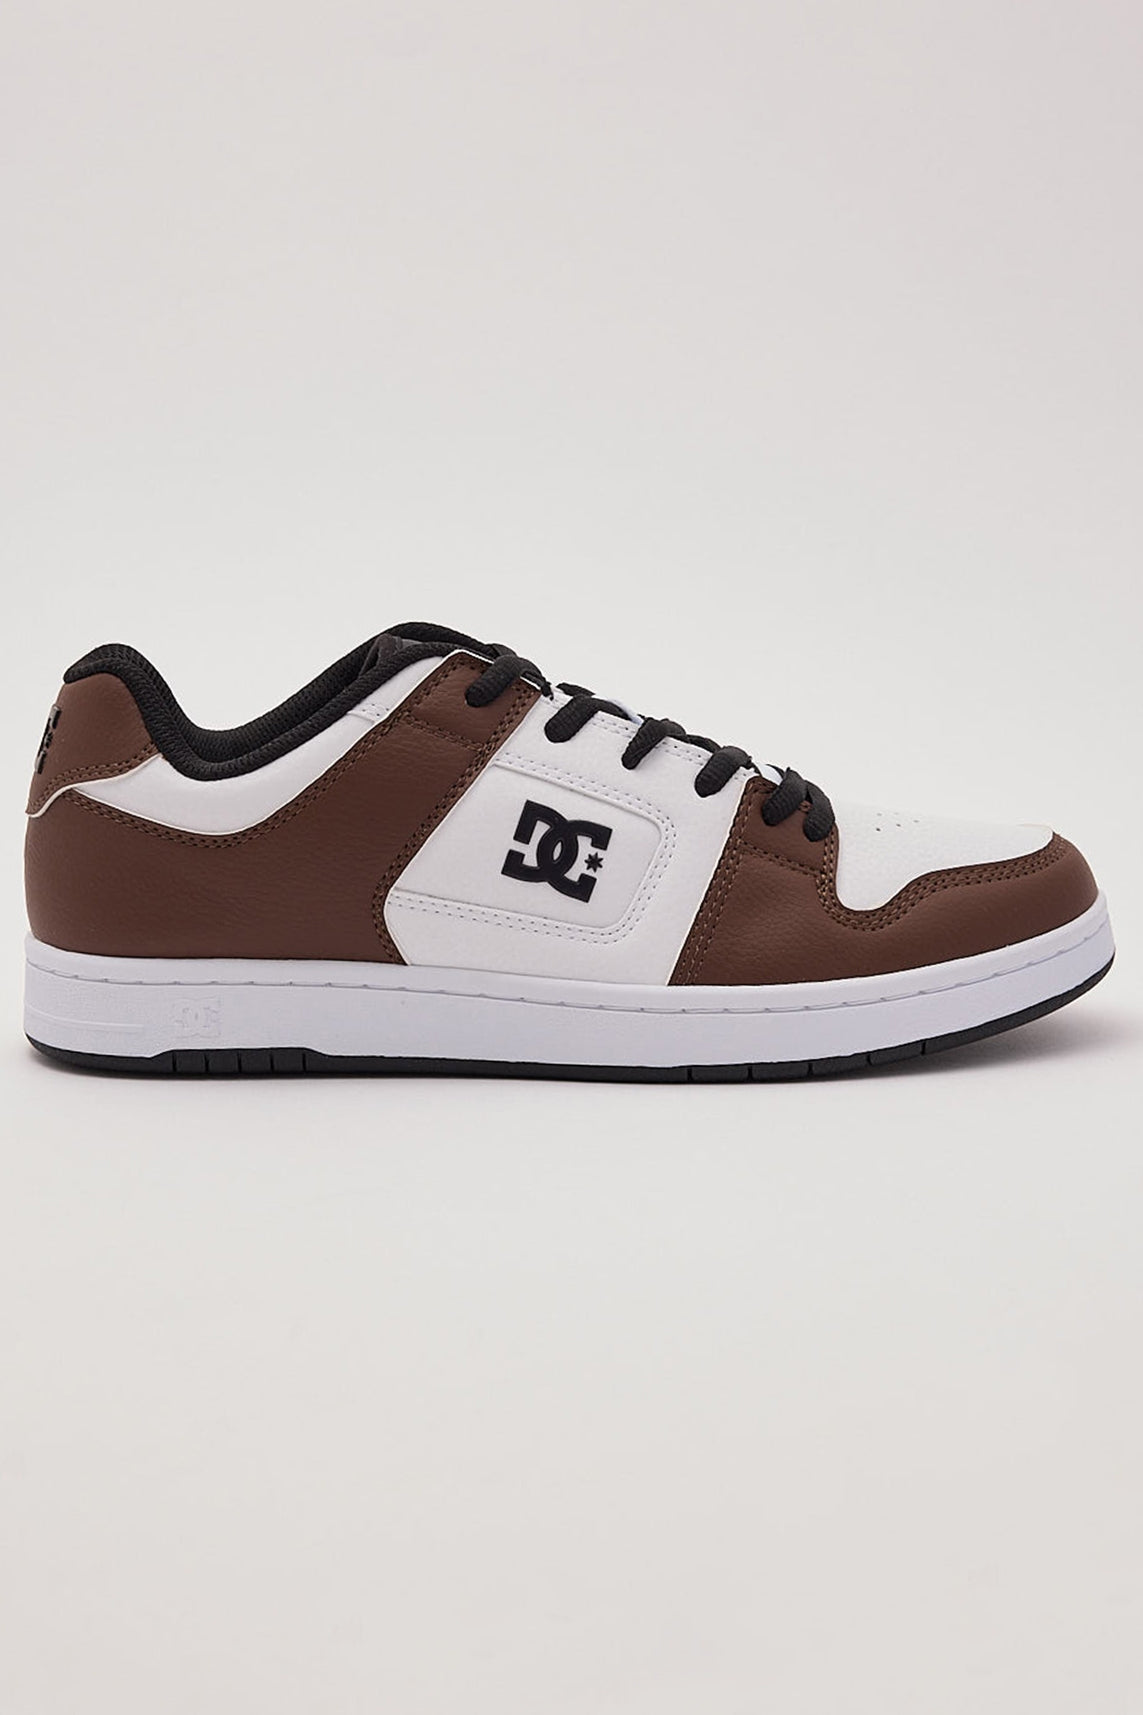 Dc Shoes Manteca 4 Brown/White